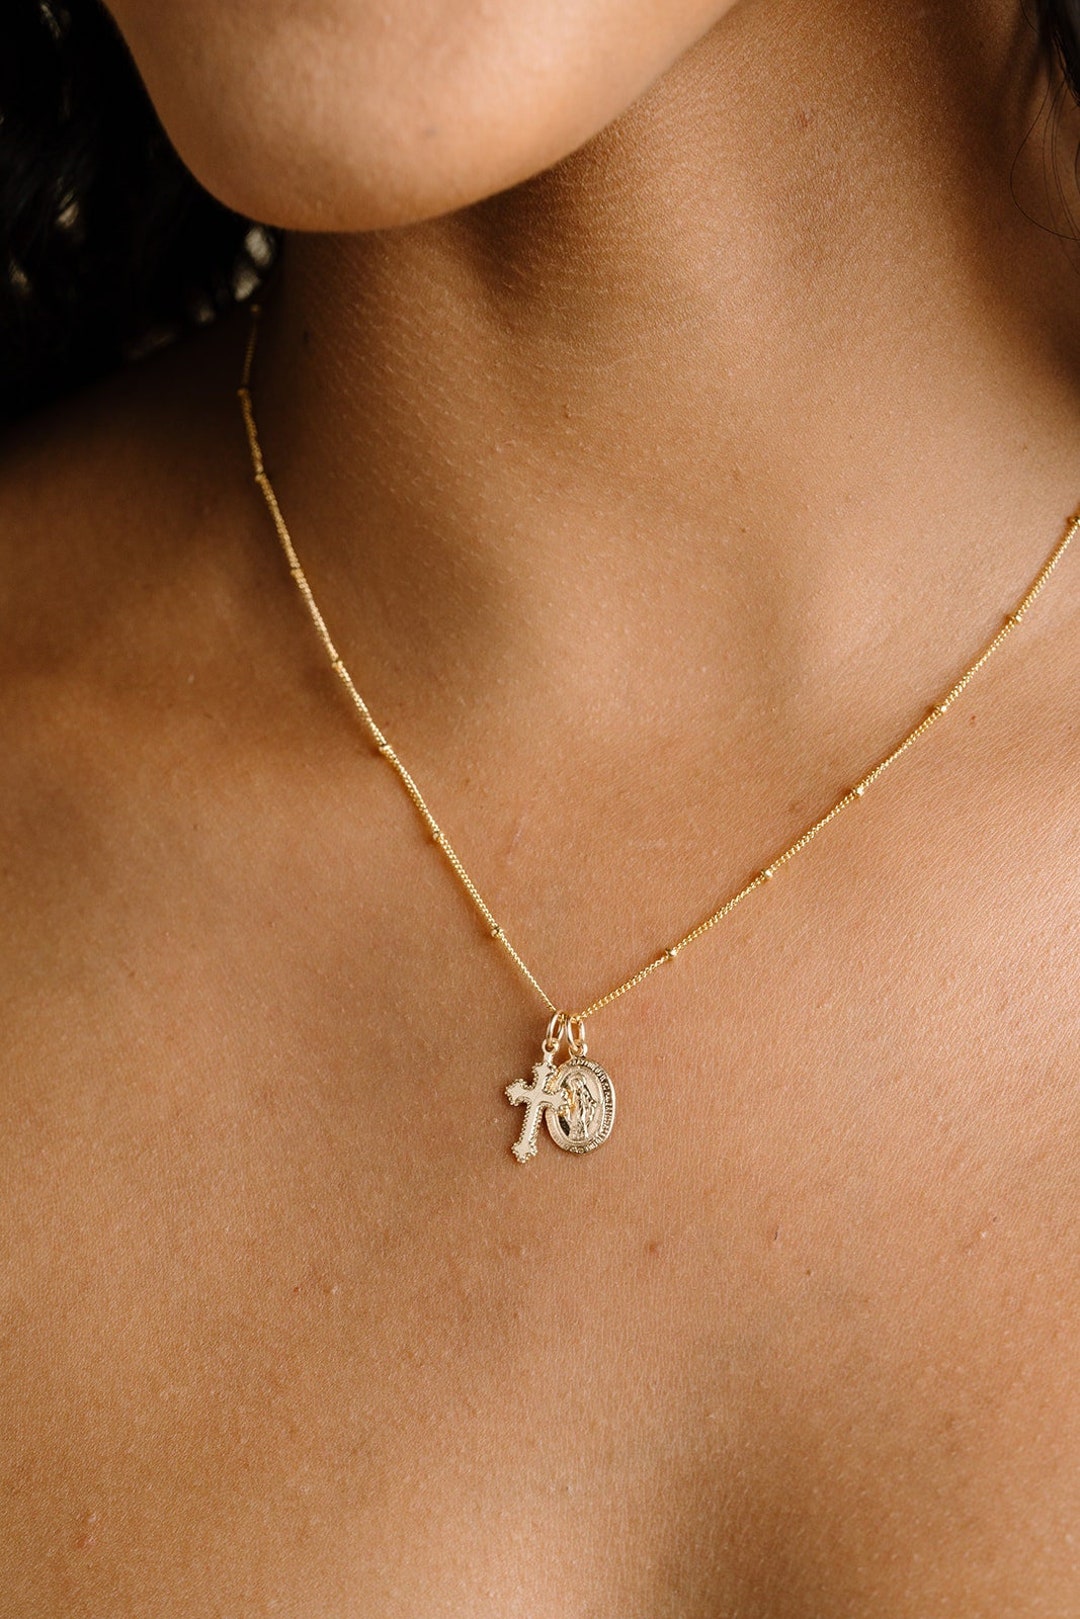 Say Yes Miraculous Mary Medal Bracelet - Dainty Catholic Jewelry